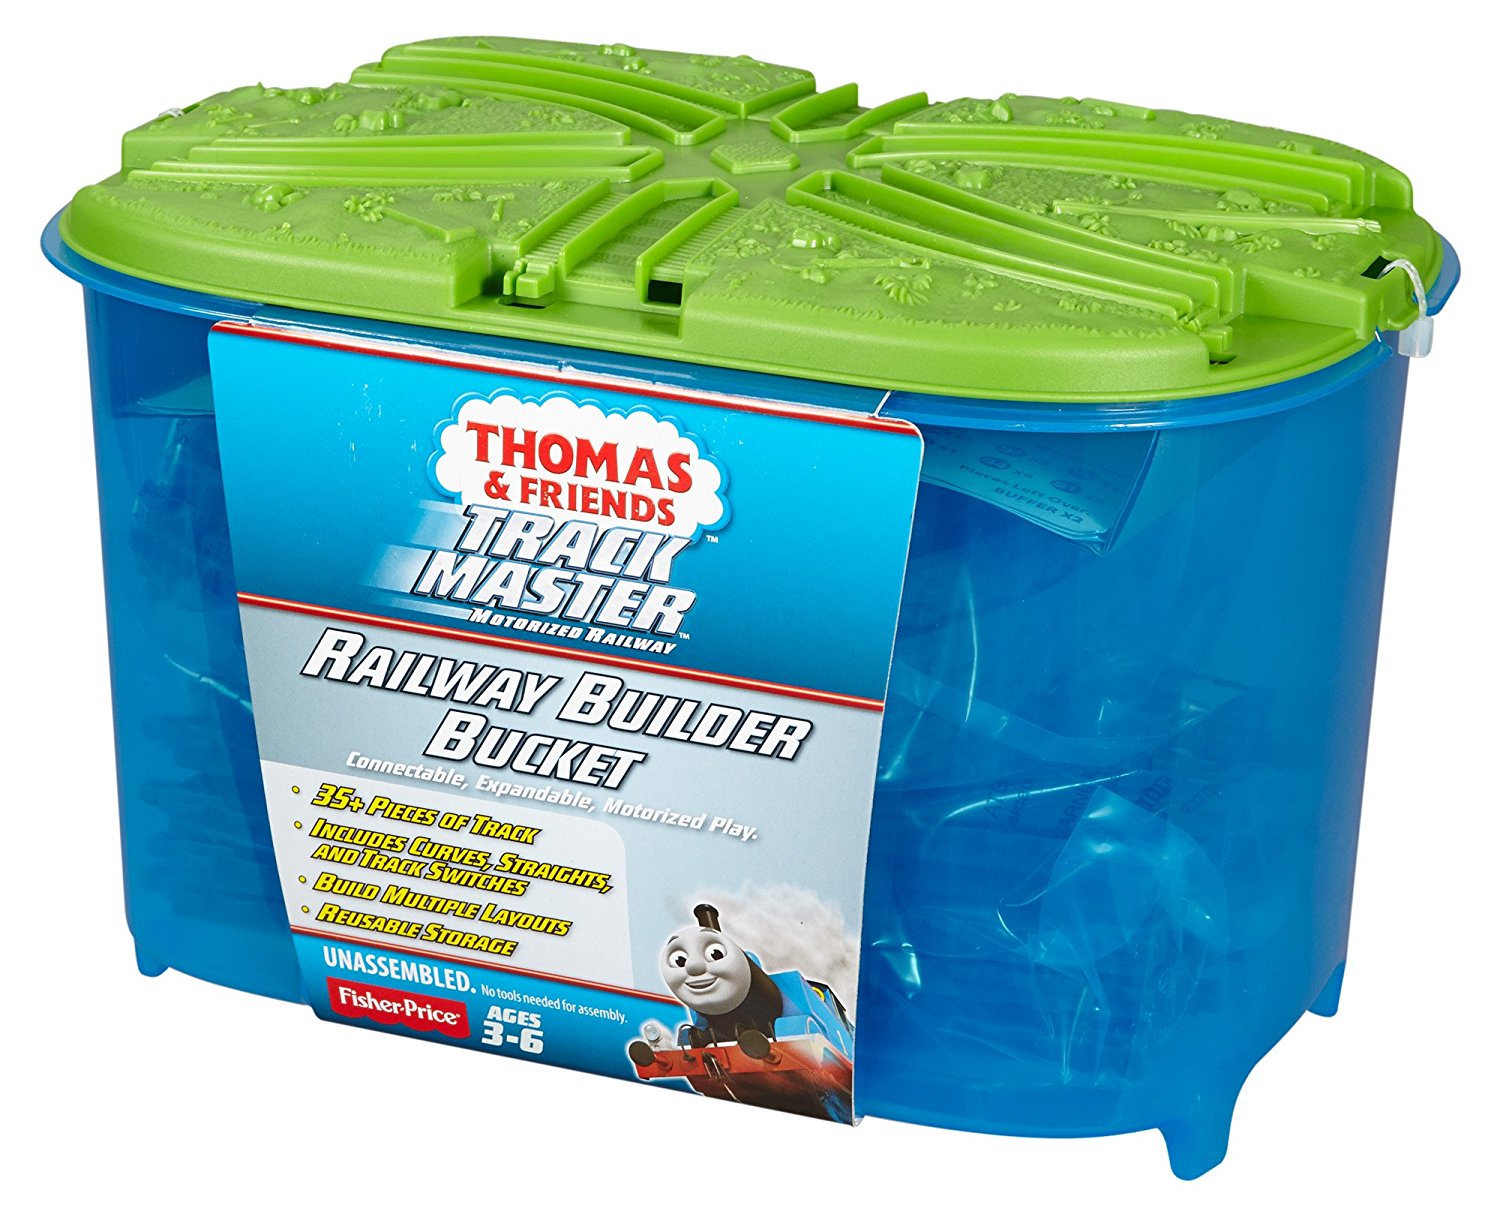 Fisher-Price Thomas & Friends TrackMaster Railway Builder Bucket – Just $10.98!